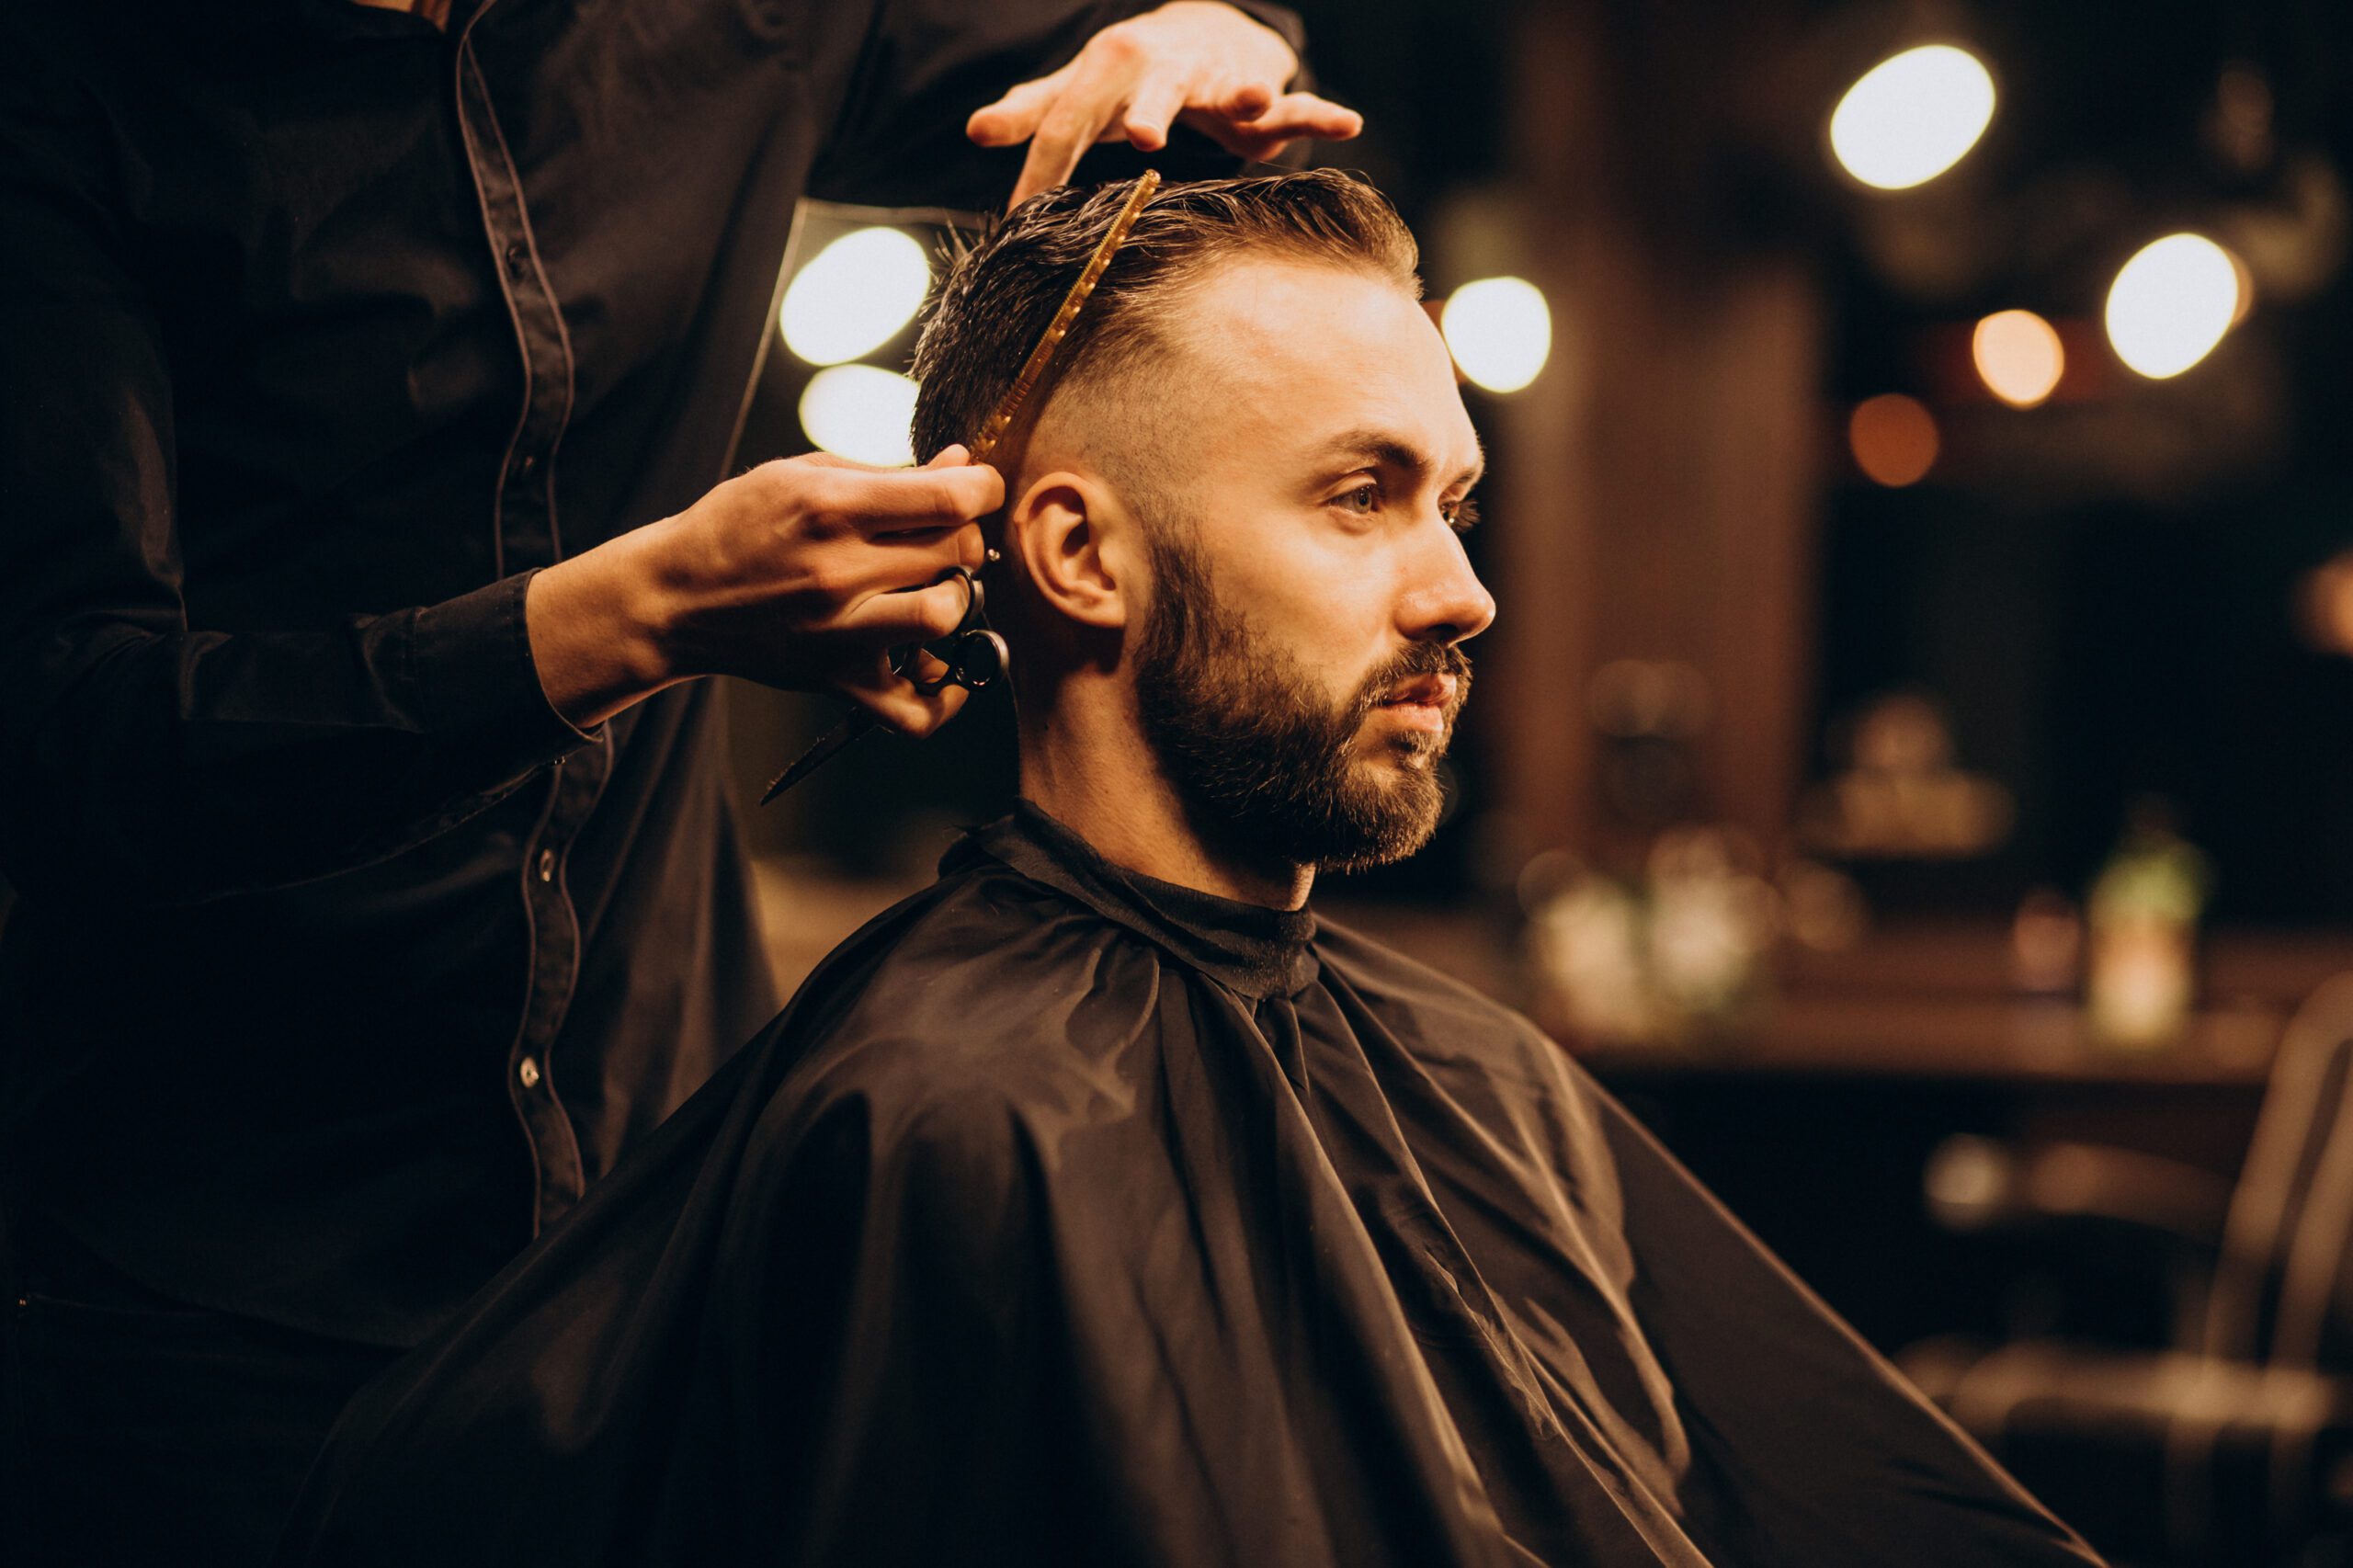 how often do men get haircuts